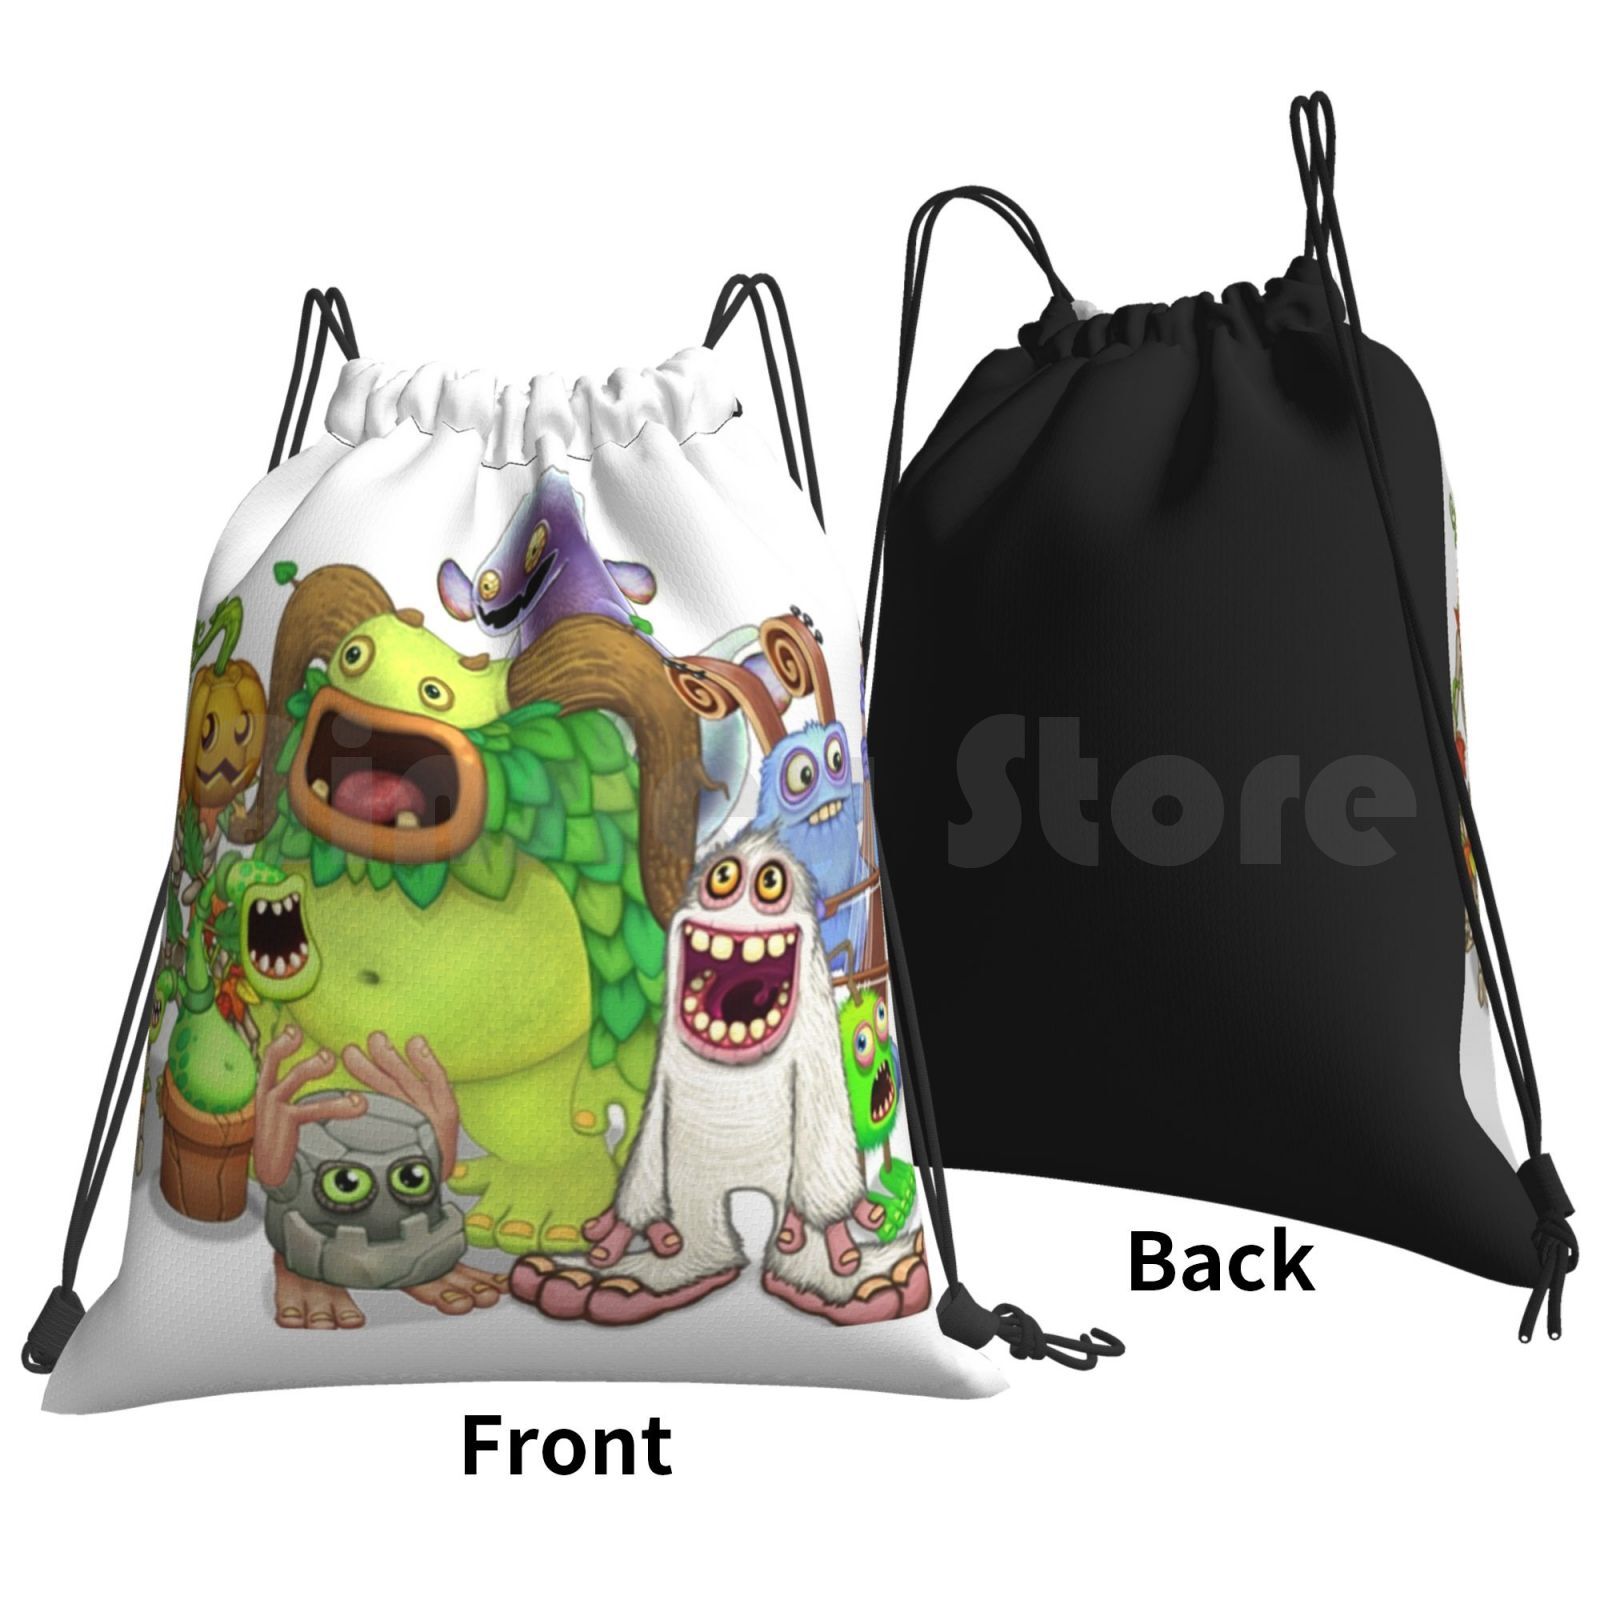 My Singing Monsters Characters Backpack Drawstring Bag Riding Climbing Gym Bag My Singing Monsters My Singing 1 - My Singing Monsters Plush